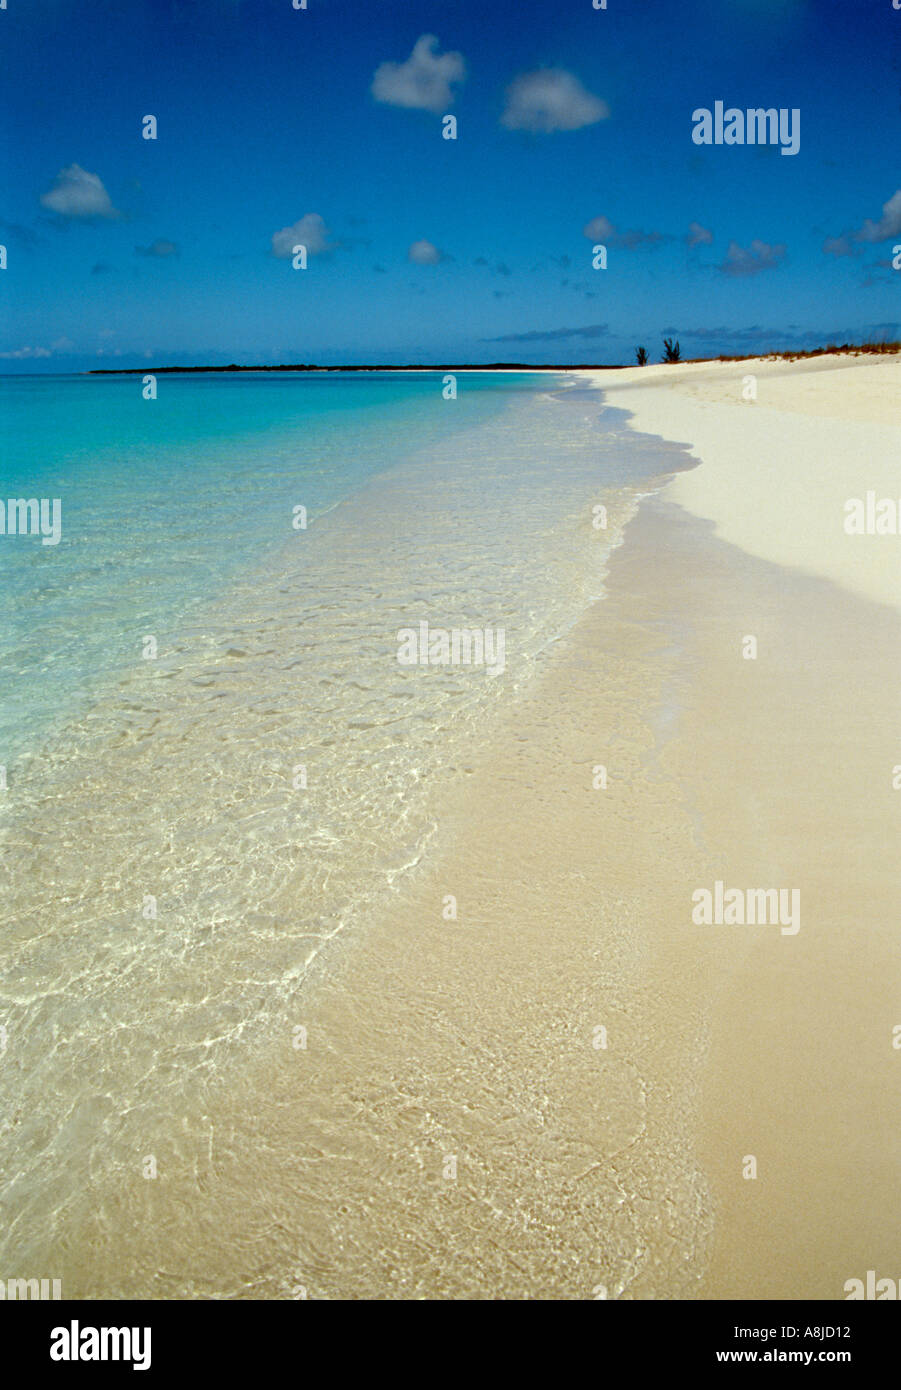 San Salvador Club Med Columbus Isle su spiagge di sabbia bianca con surf Foto Stock